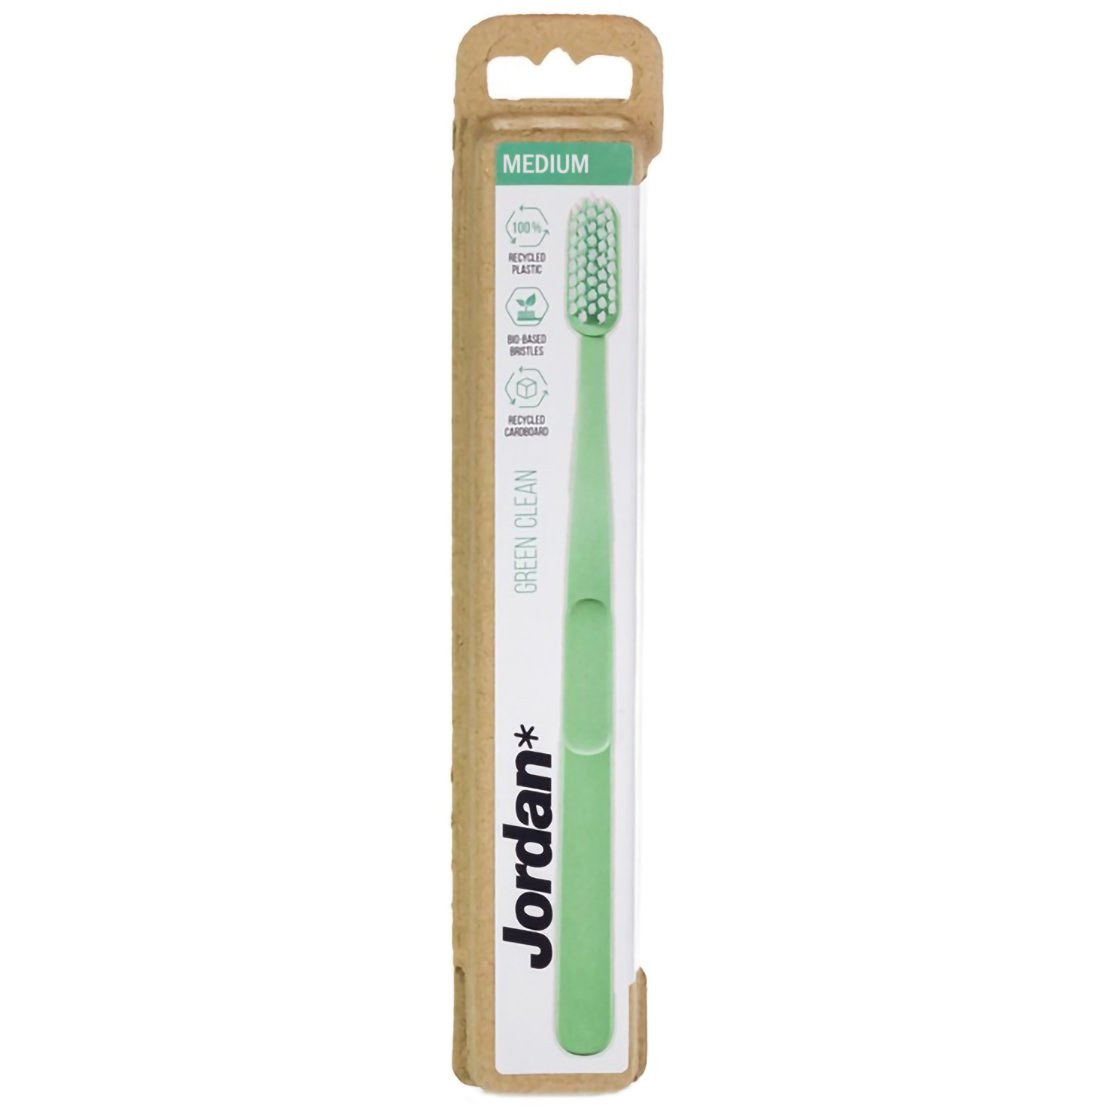 Jordan Green Clean Medium Toothbrush Bio Eco Χειροκίνητη Οδοντόβουρτσα Μέτρια, με Βιολογικής Προέλευσης Ίνες 1 Τεμάχιο – Πράσινο